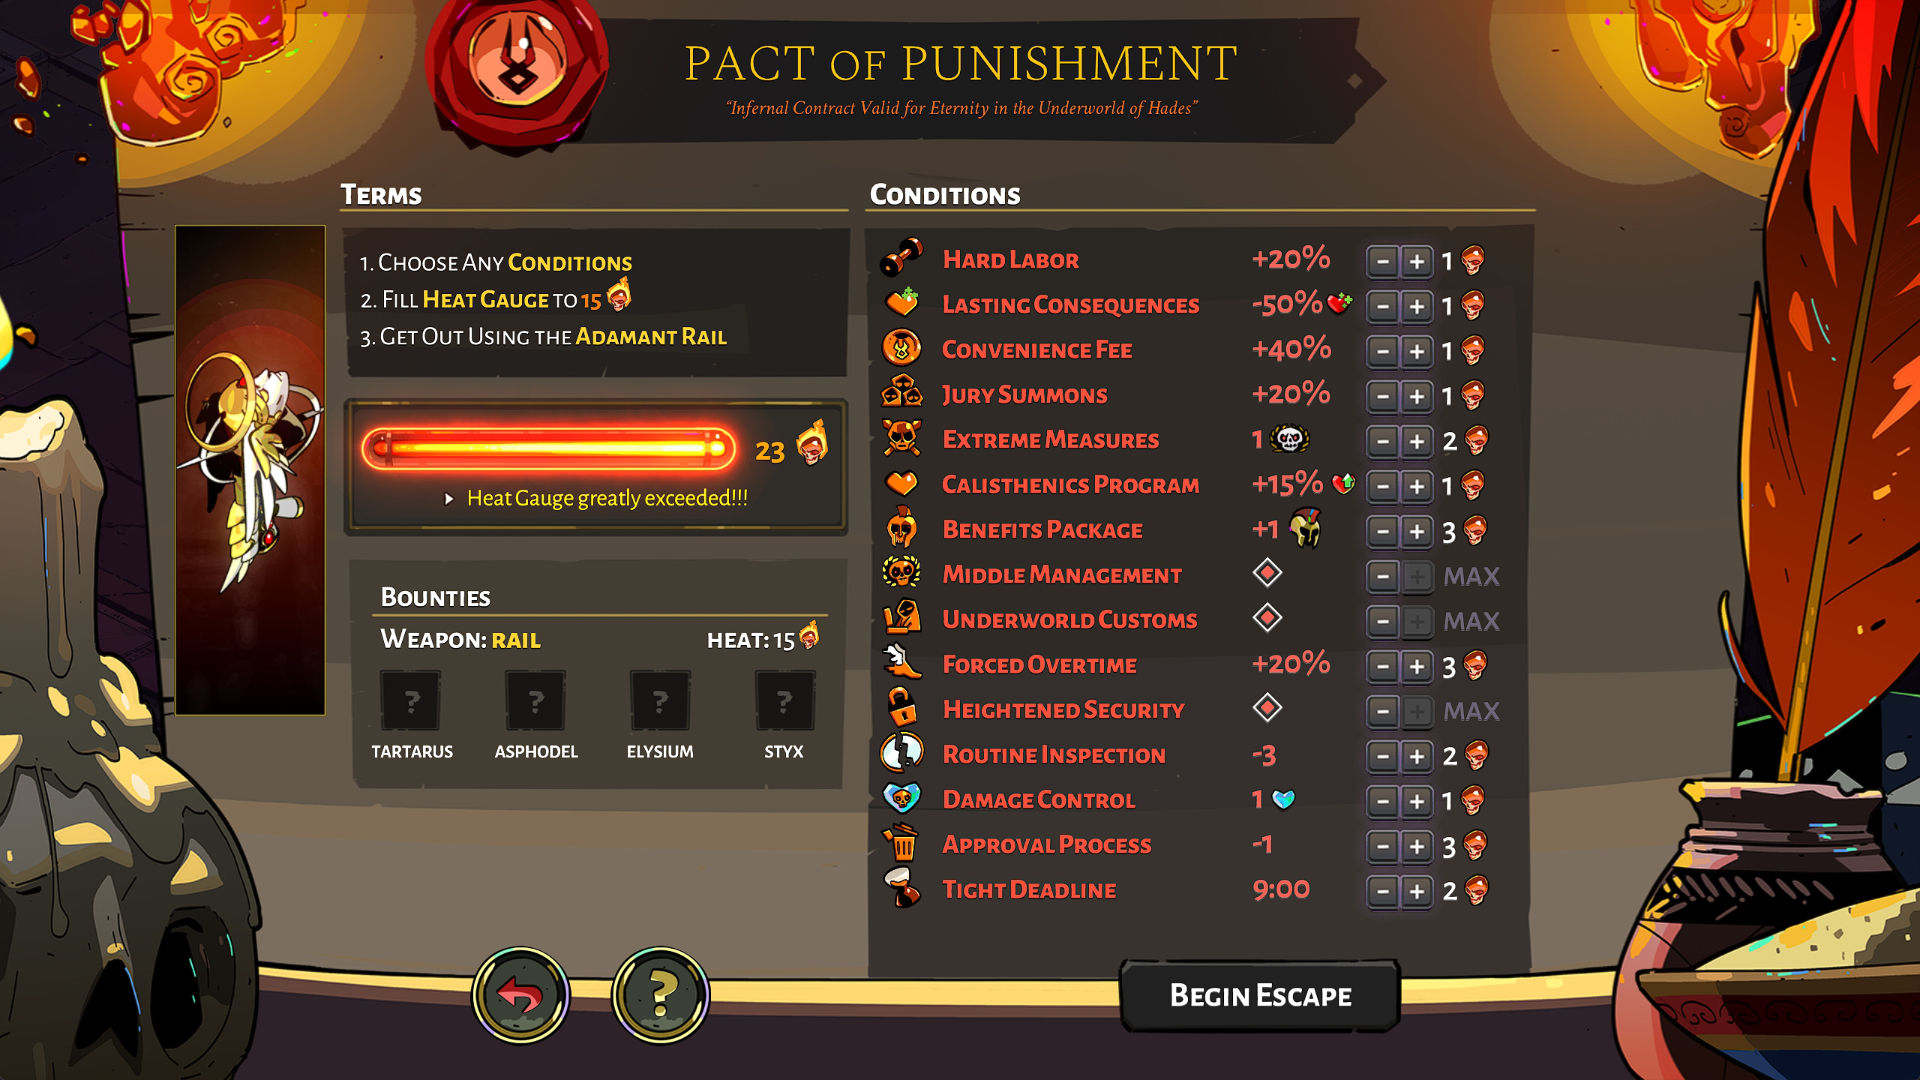 Pact of Punishment